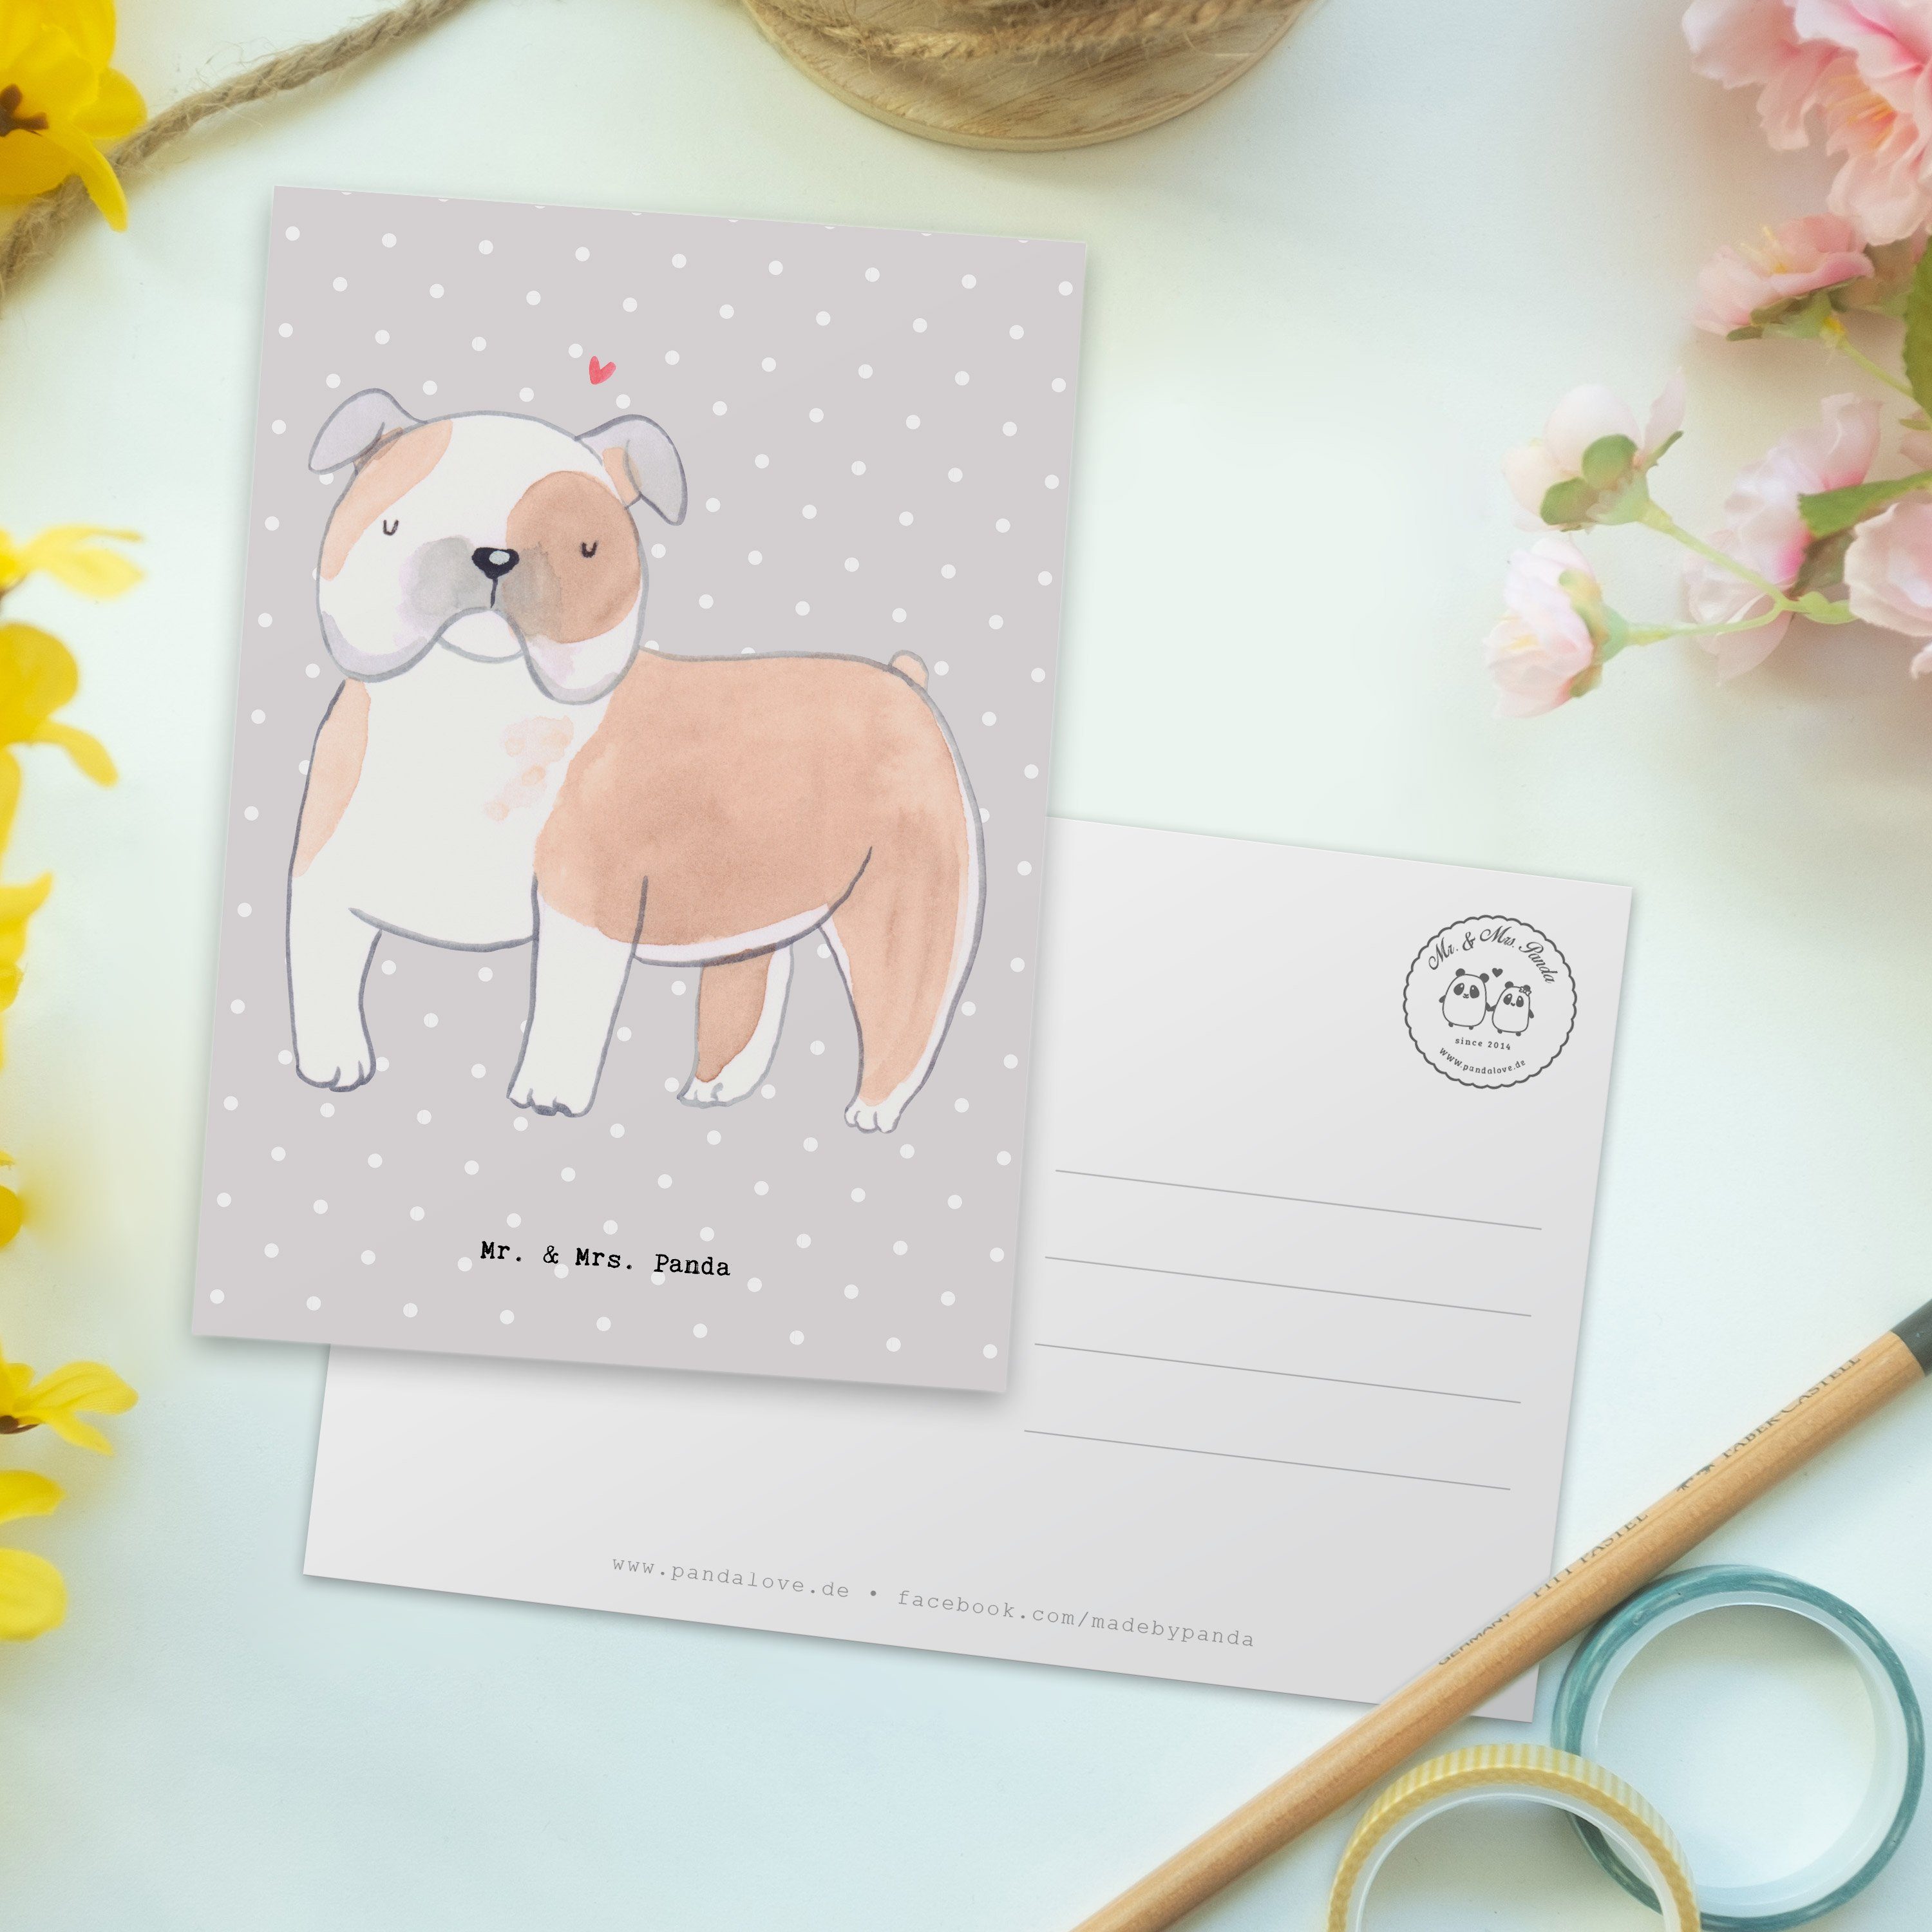 Mr. & Mrs. Panda Bulldogge Moment Grau Hundebes - Postkarte Karte, Geschenk, - Englische Pastell